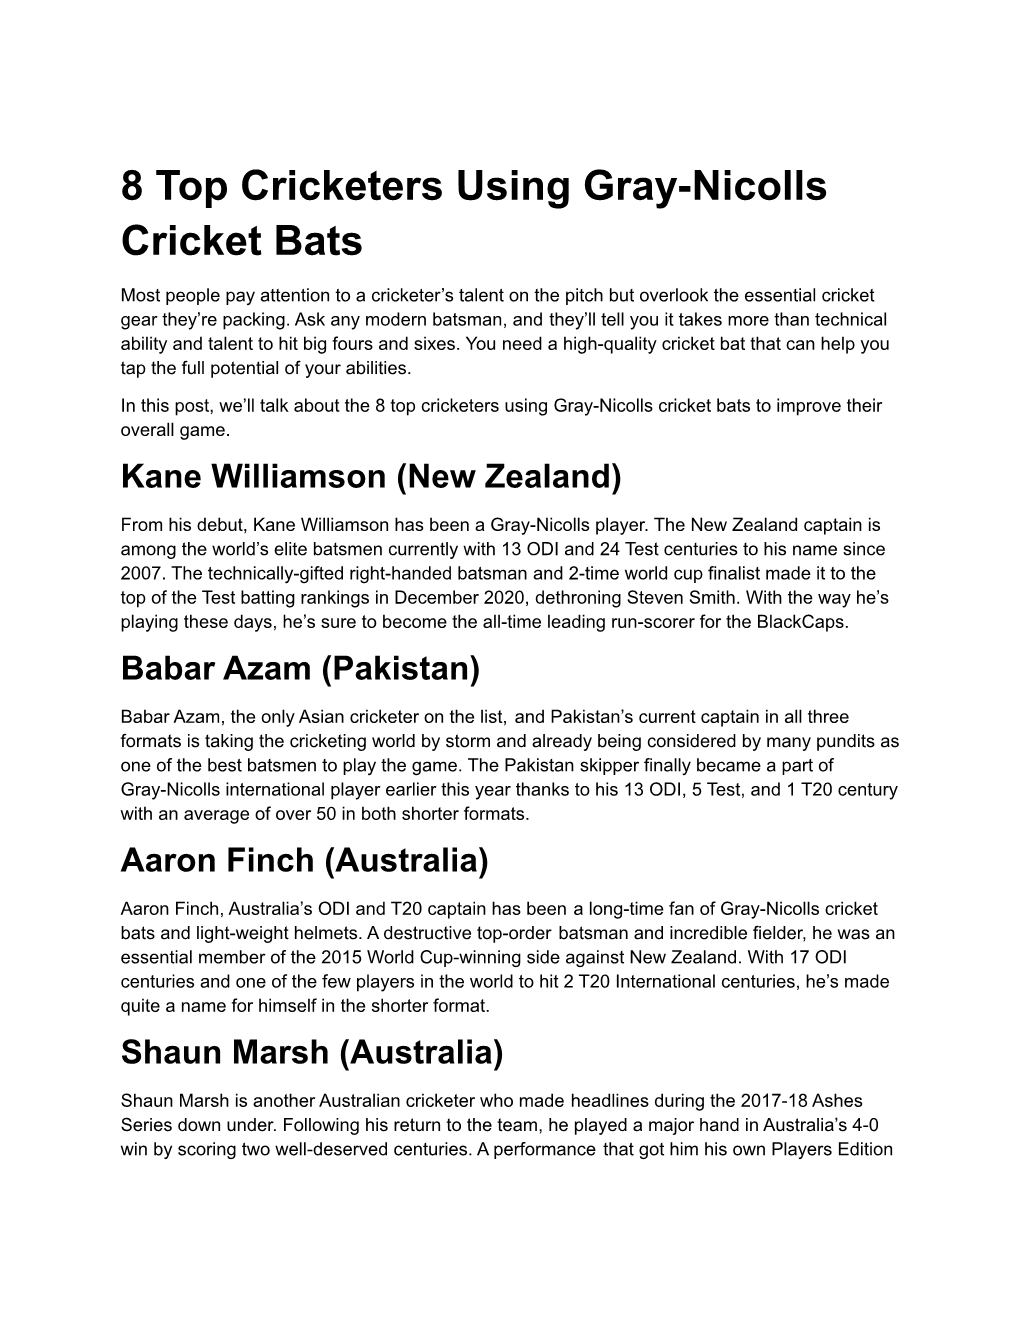 8 Top Cricketers Using Gray-Nicolls Cricket Bats